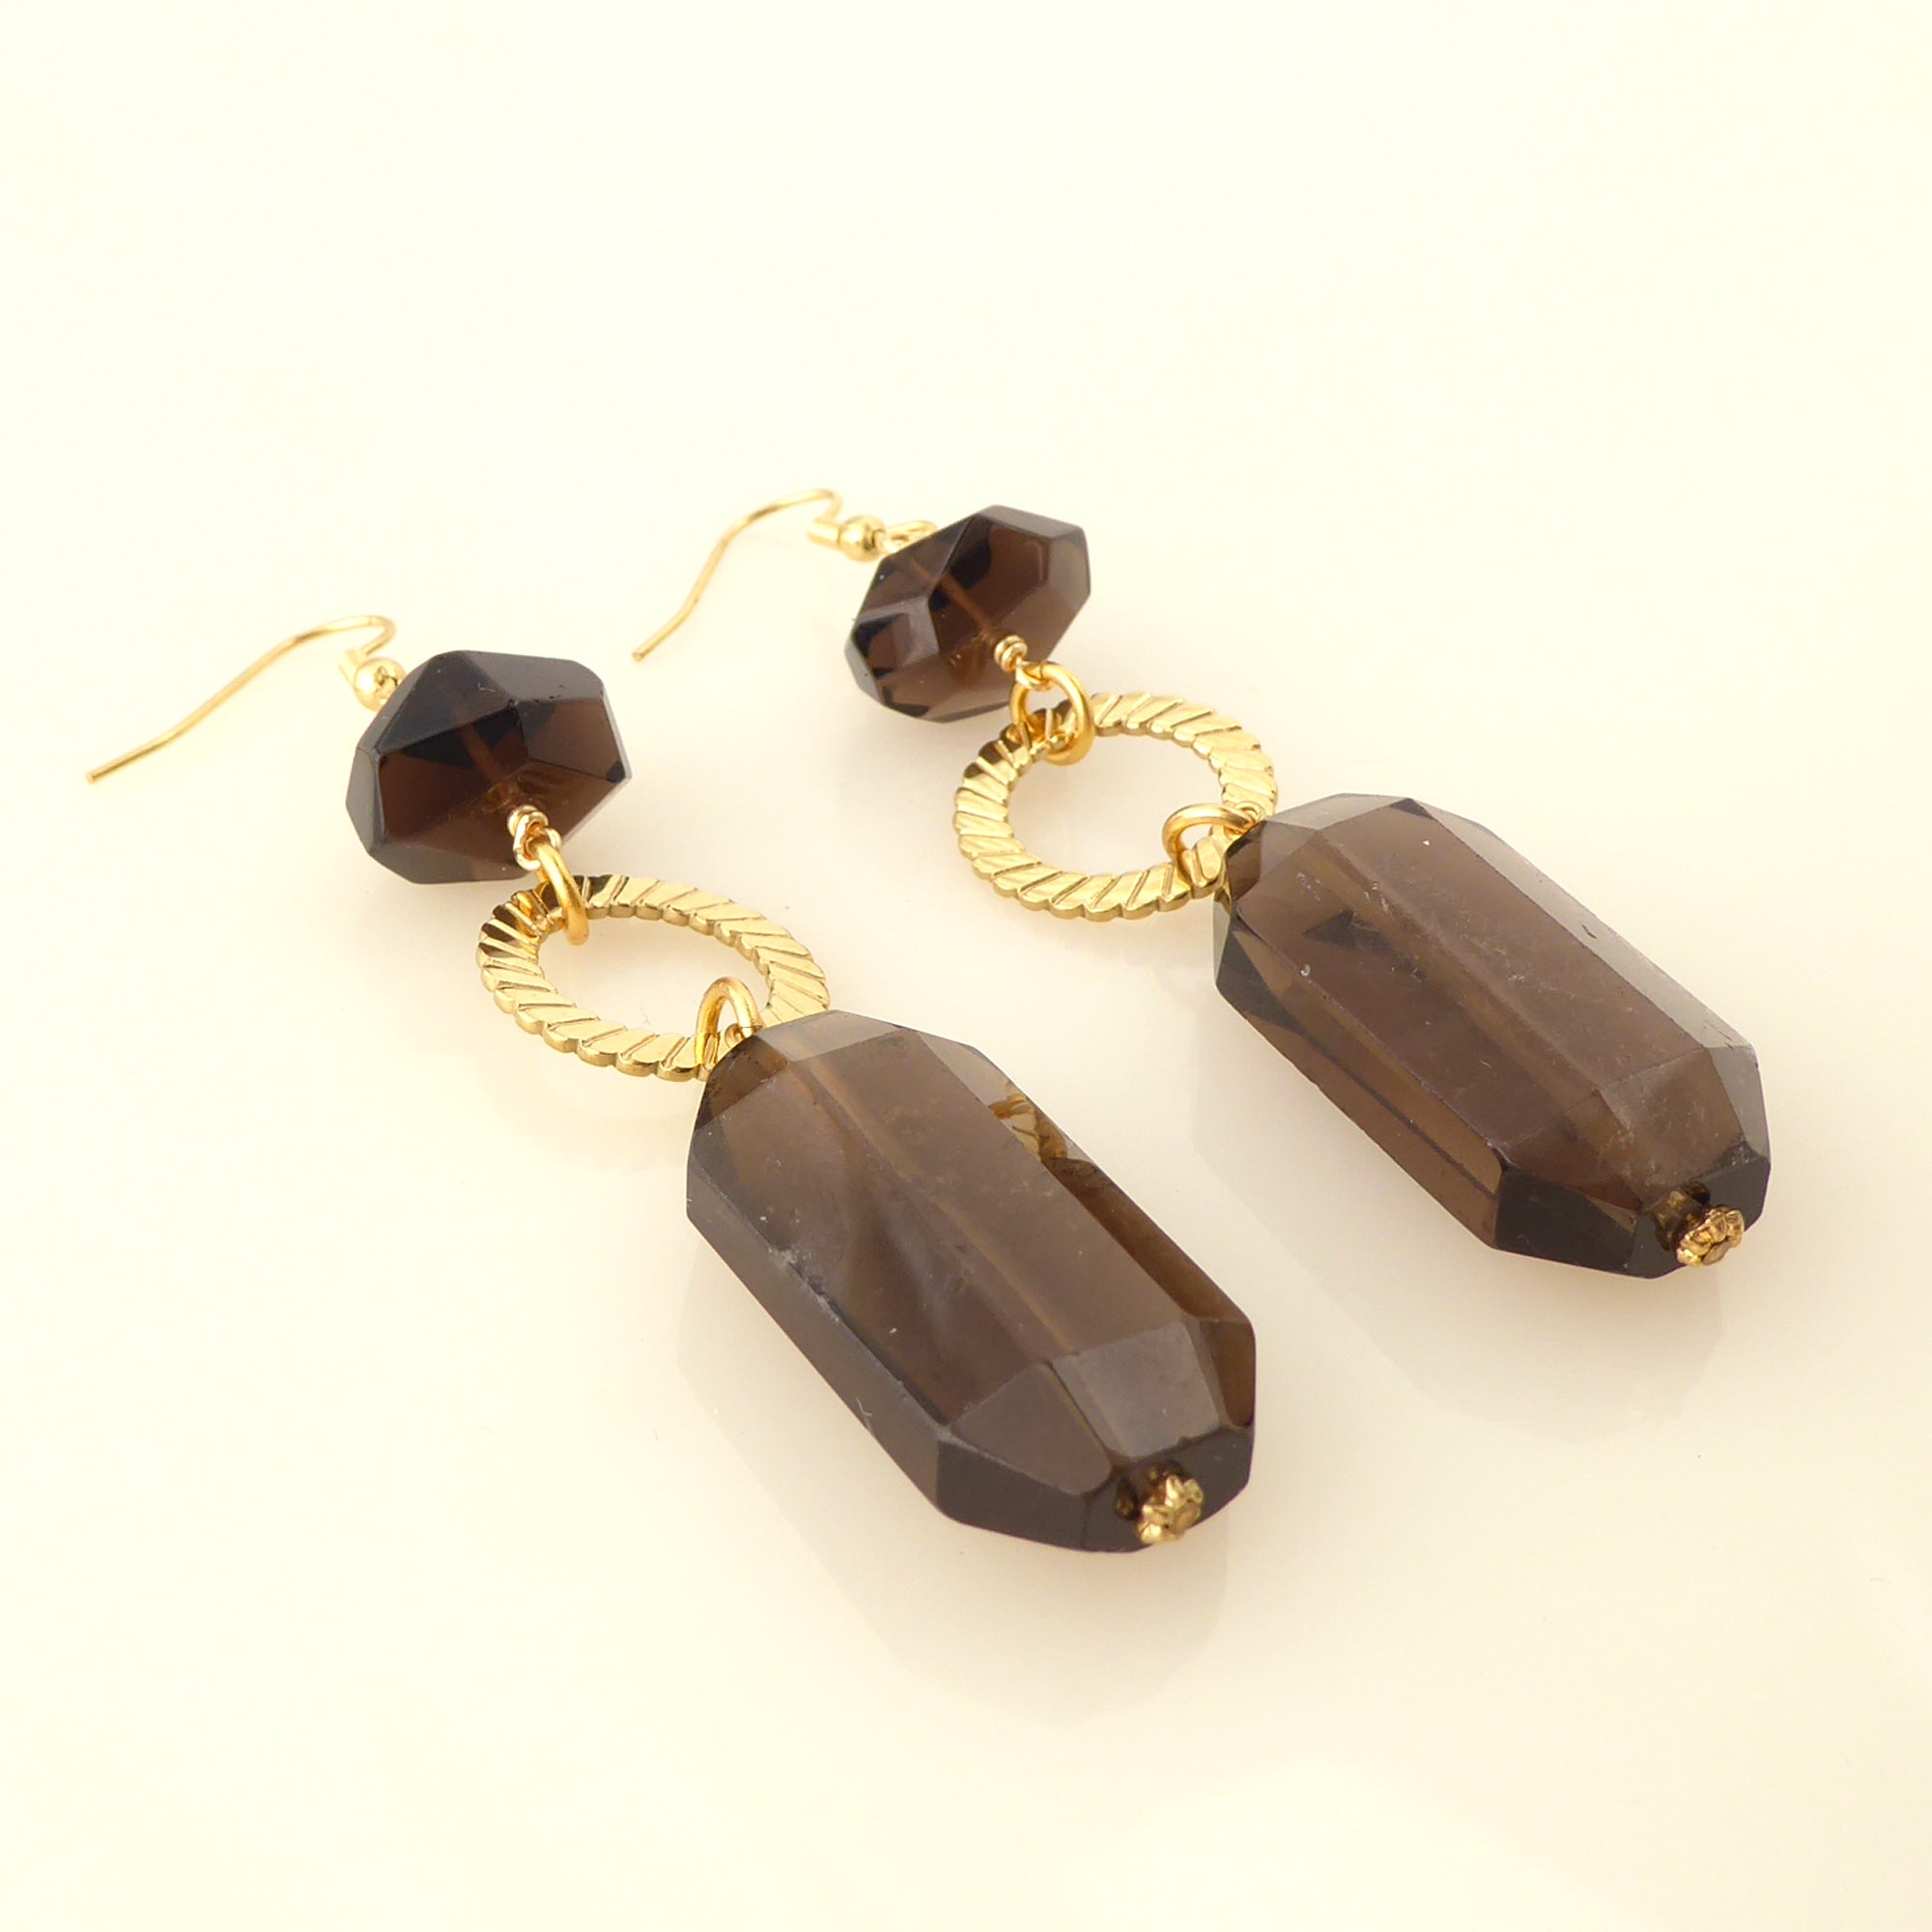 Smoky quartz nugget earrings by Jenny Dayco 2